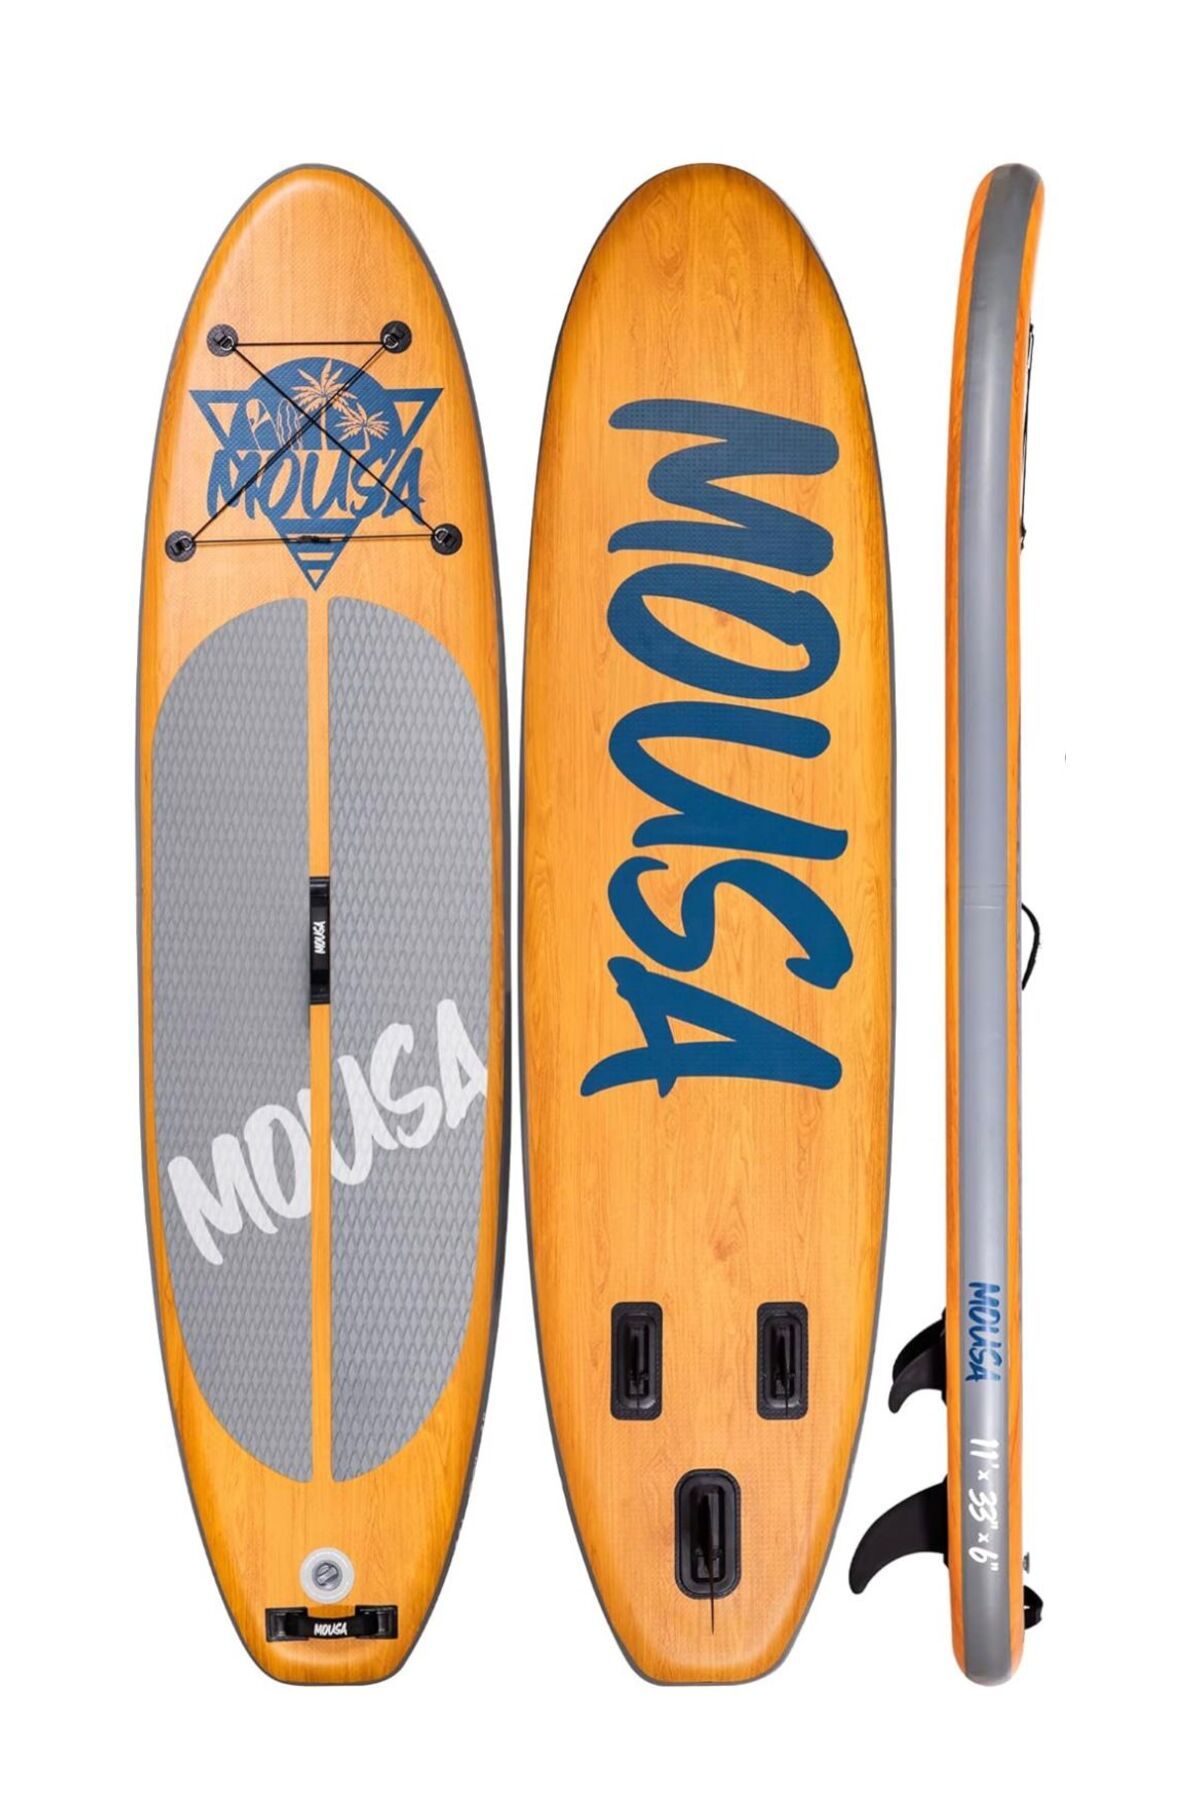 MOUSA Sup Şişme Sörf Tahtası Stand Up Paddle Board Fiyatı, Yorumları ...